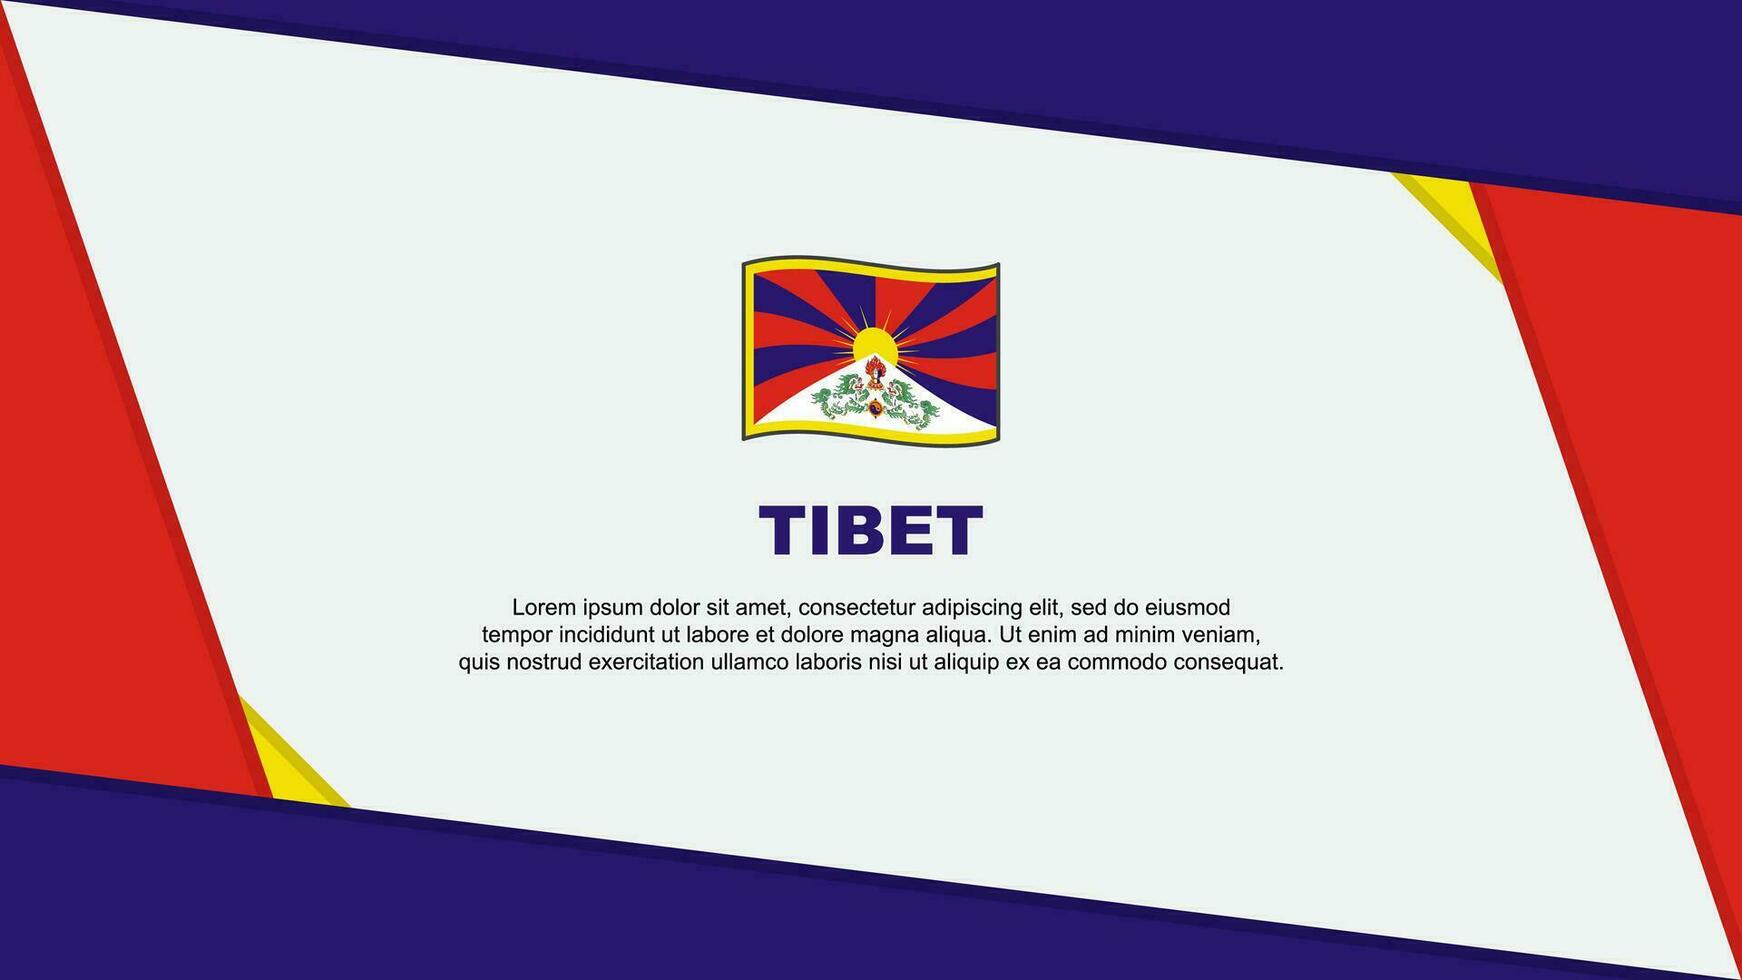 Tibet Flag Abstract Background Design Template. Tibet Independence Day Banner Cartoon Vector Illustration. Tibet Independence Day